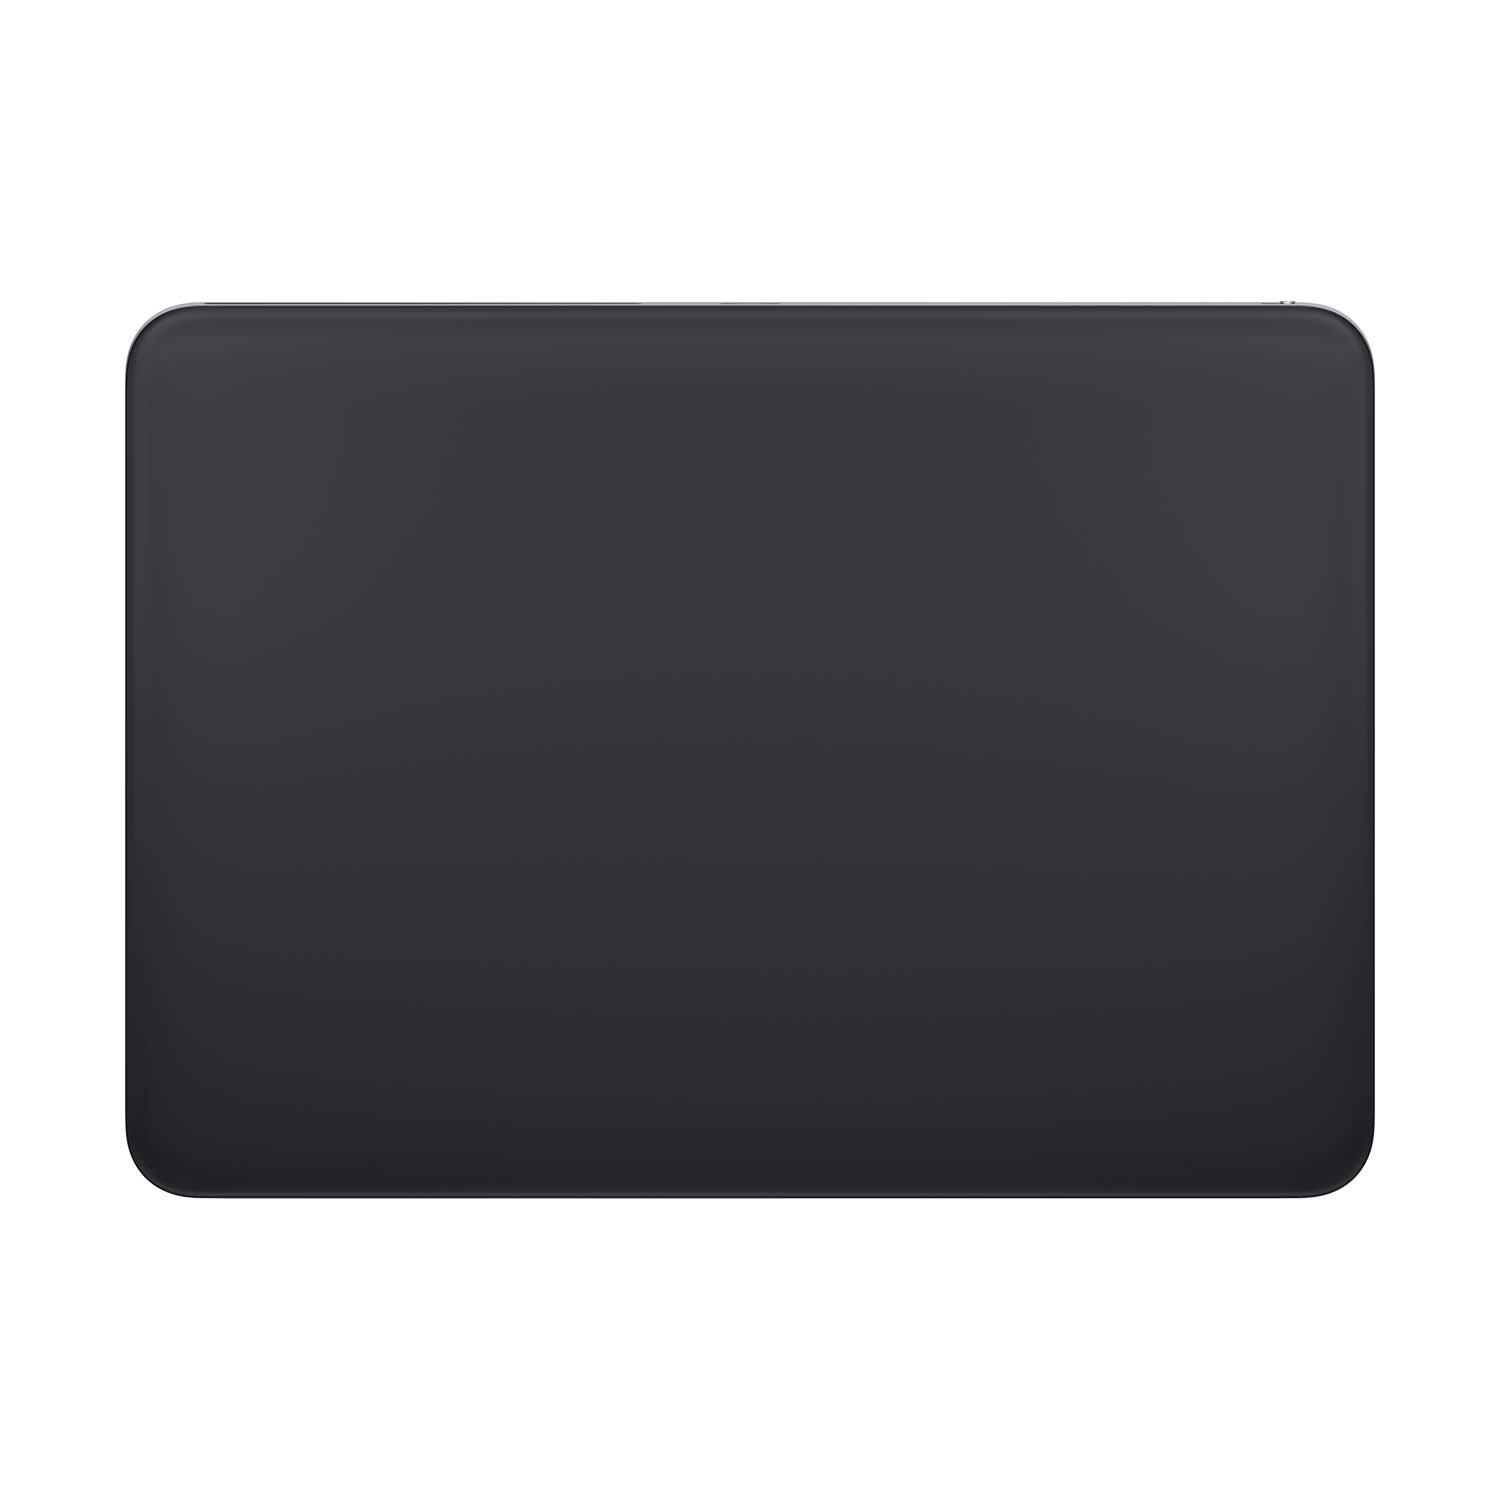 Apple Magic Trackpad – Schwarze Multi-Touch Oberfläche